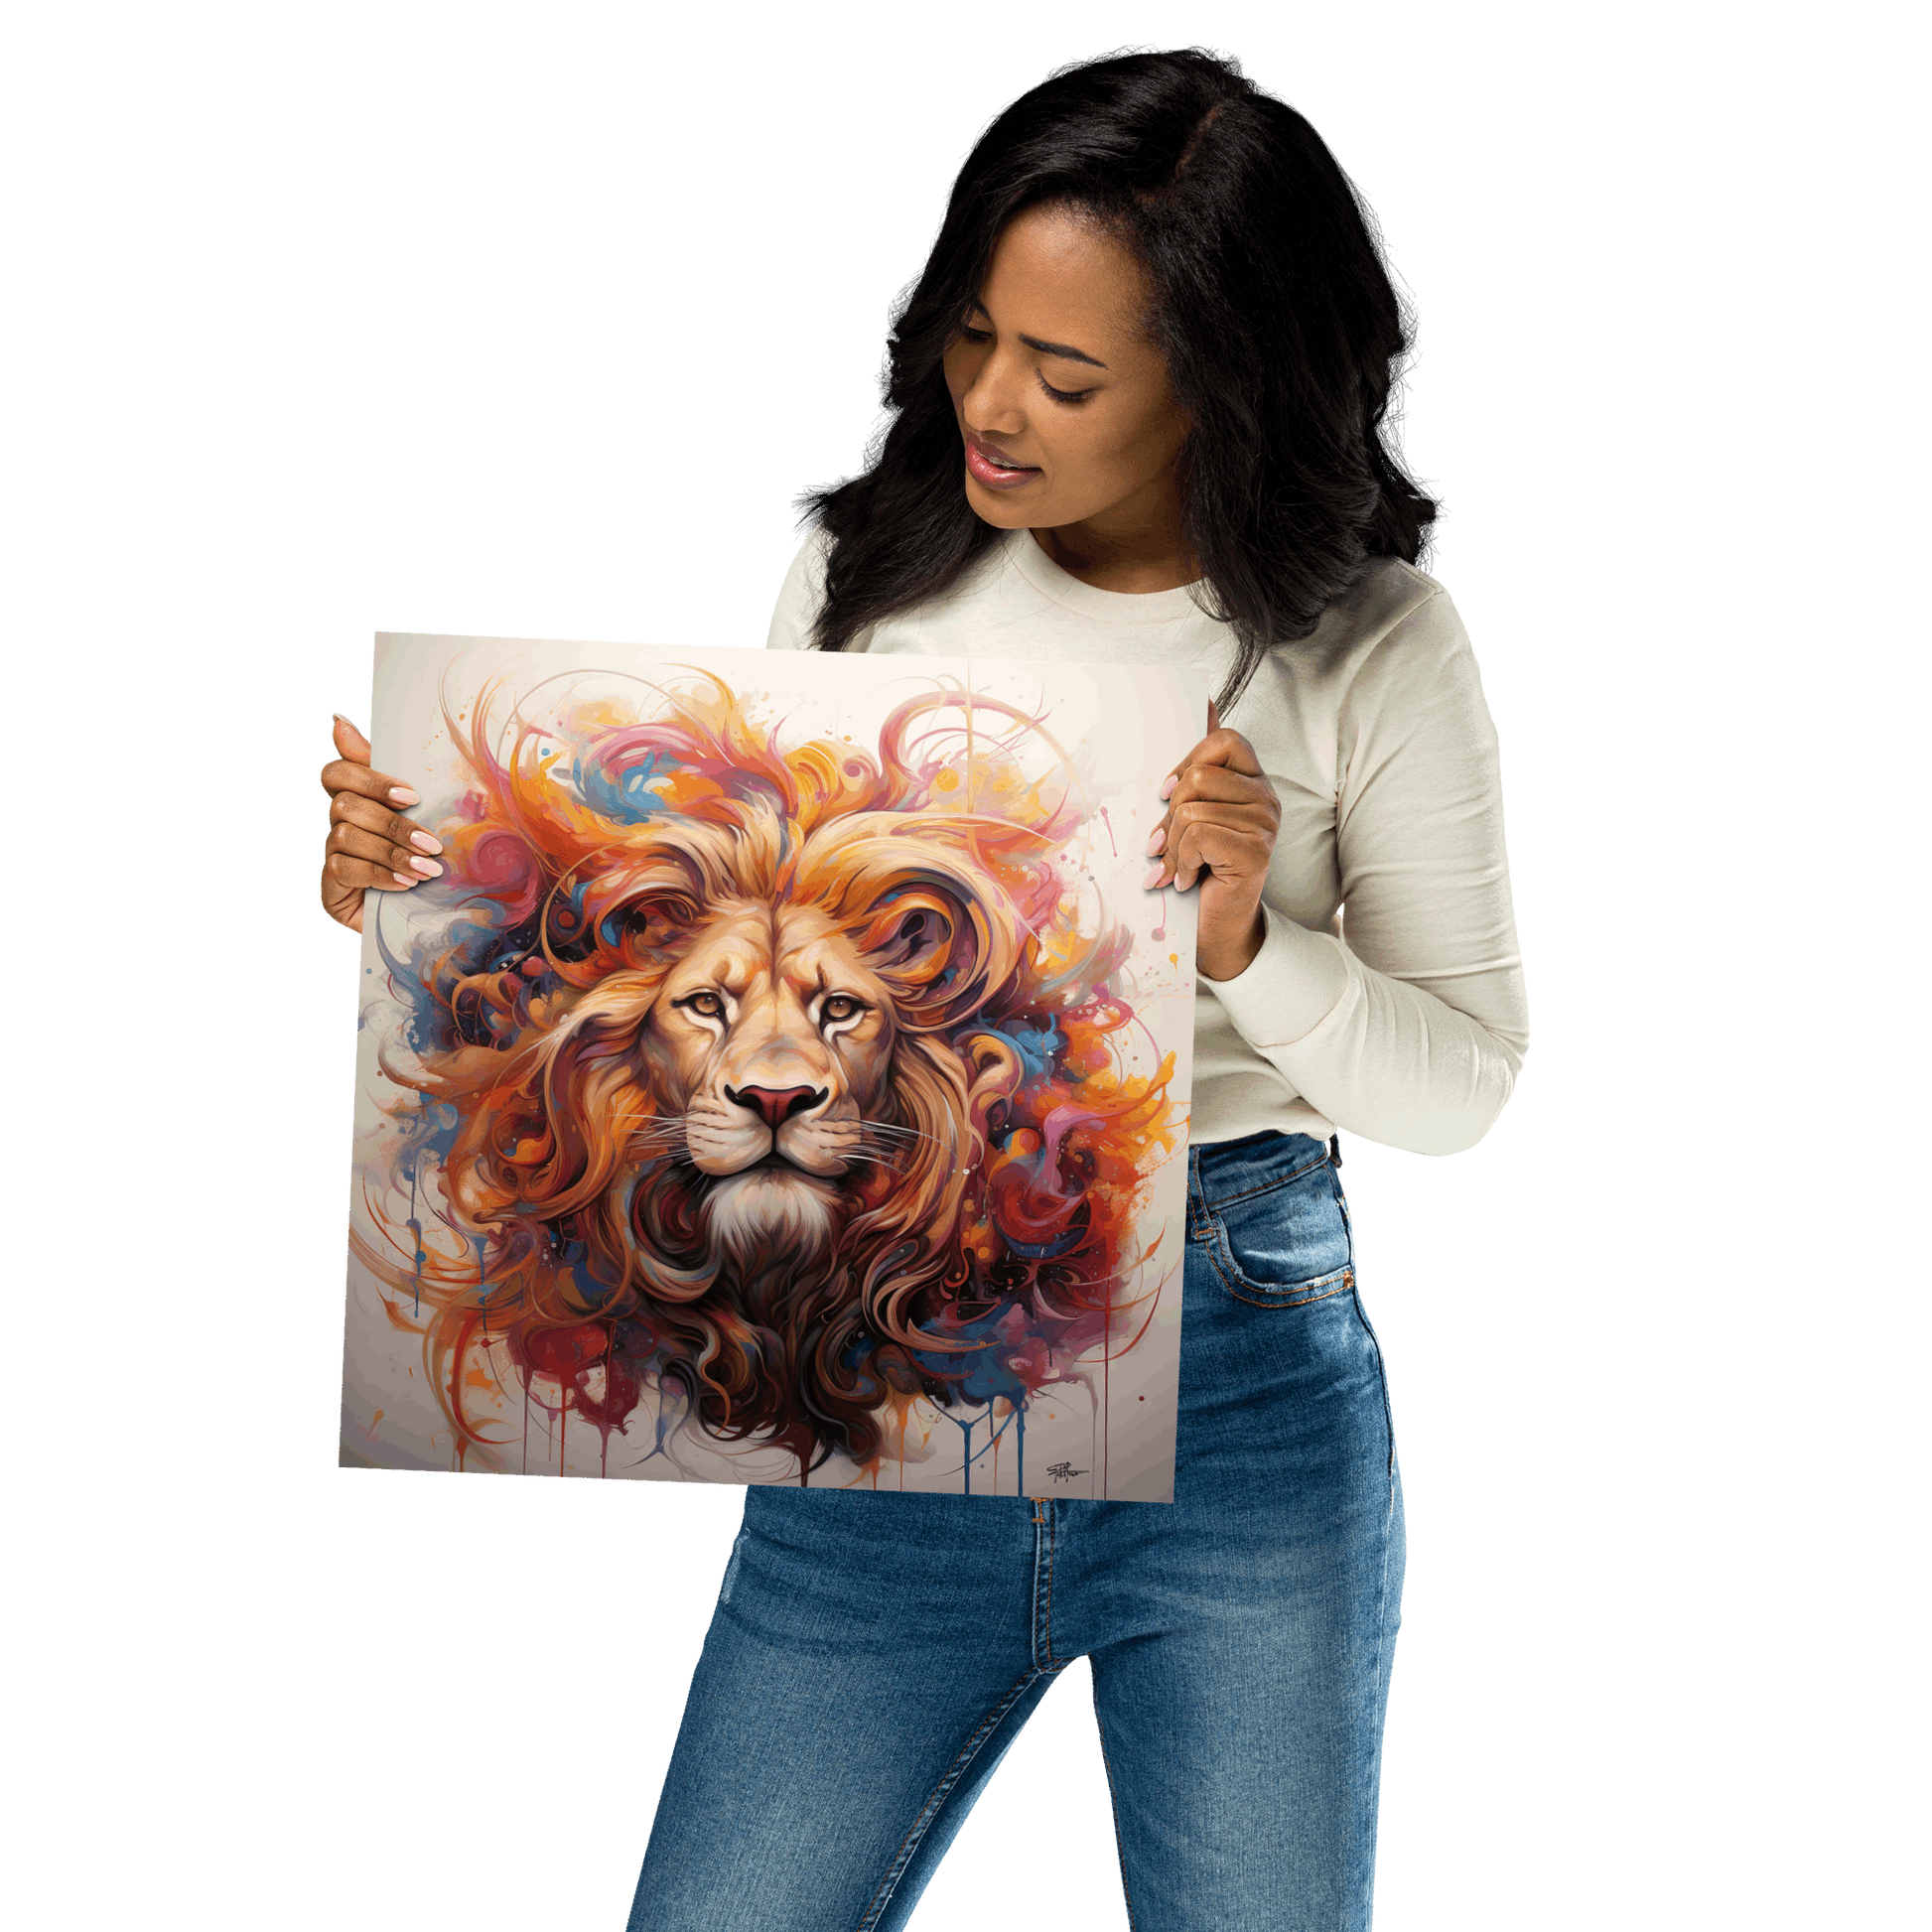 Mystical Lion Abstract Digital Art Poster